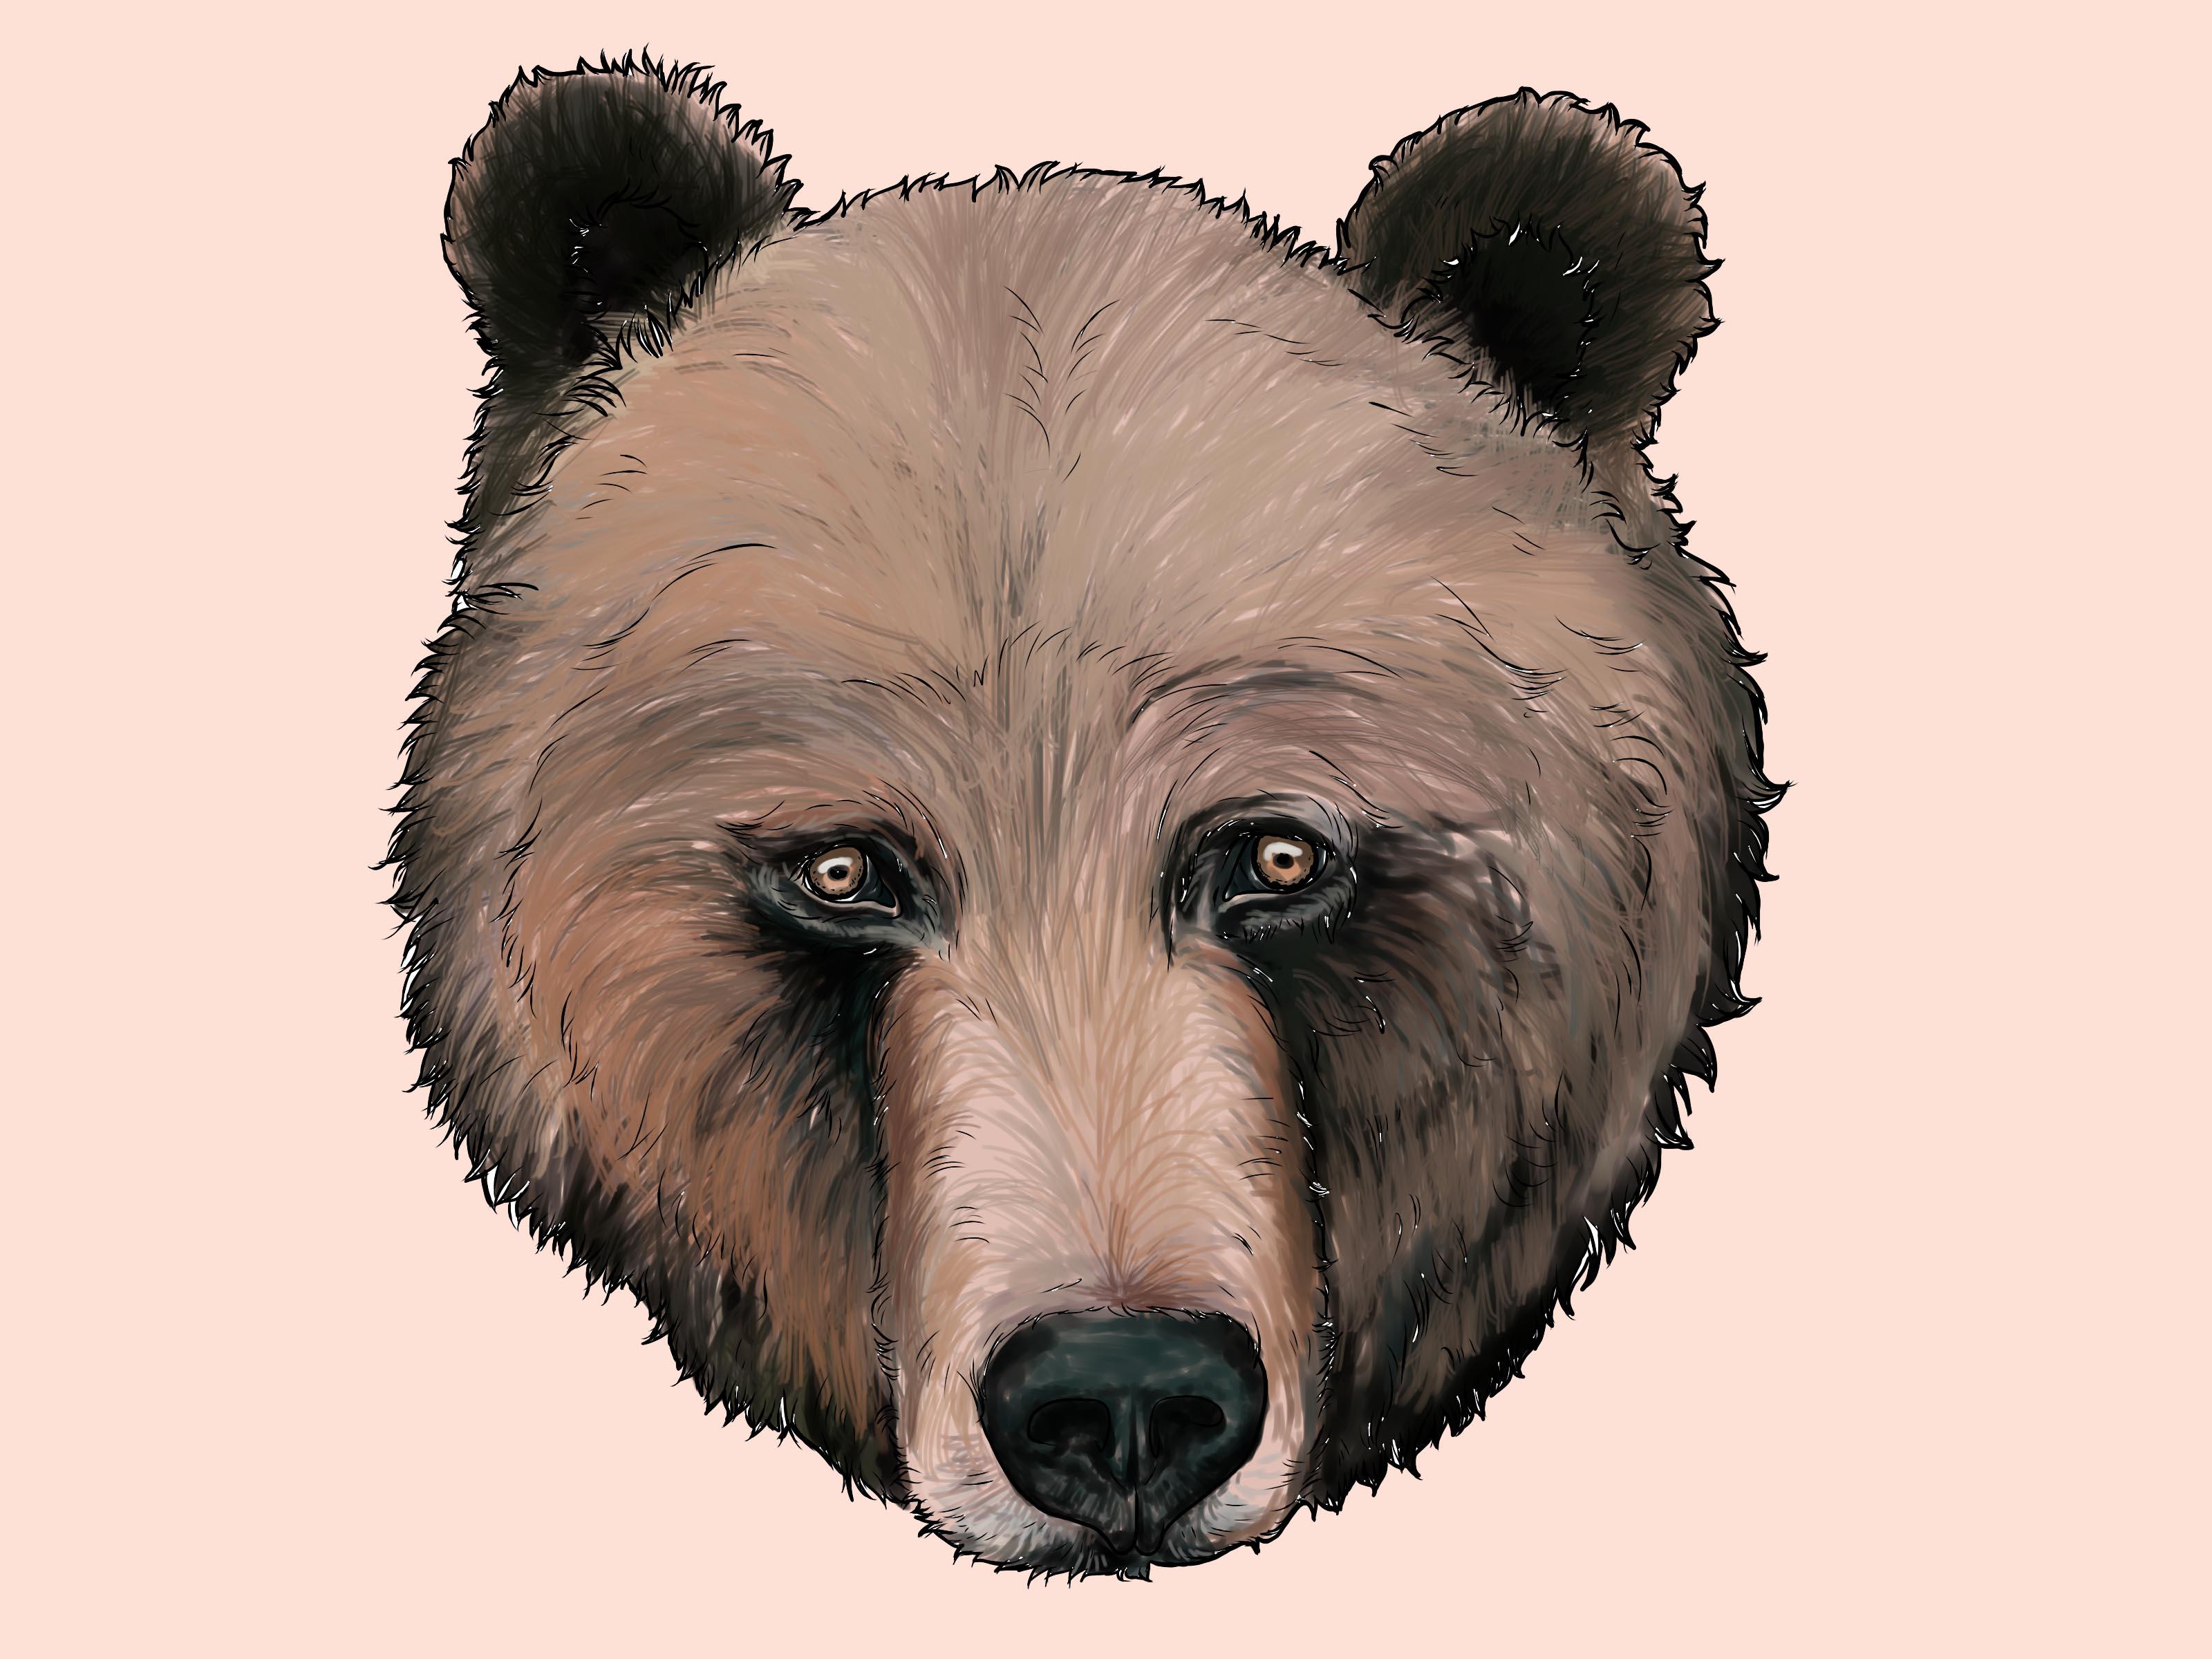 Easy Bear Face Drawing.com